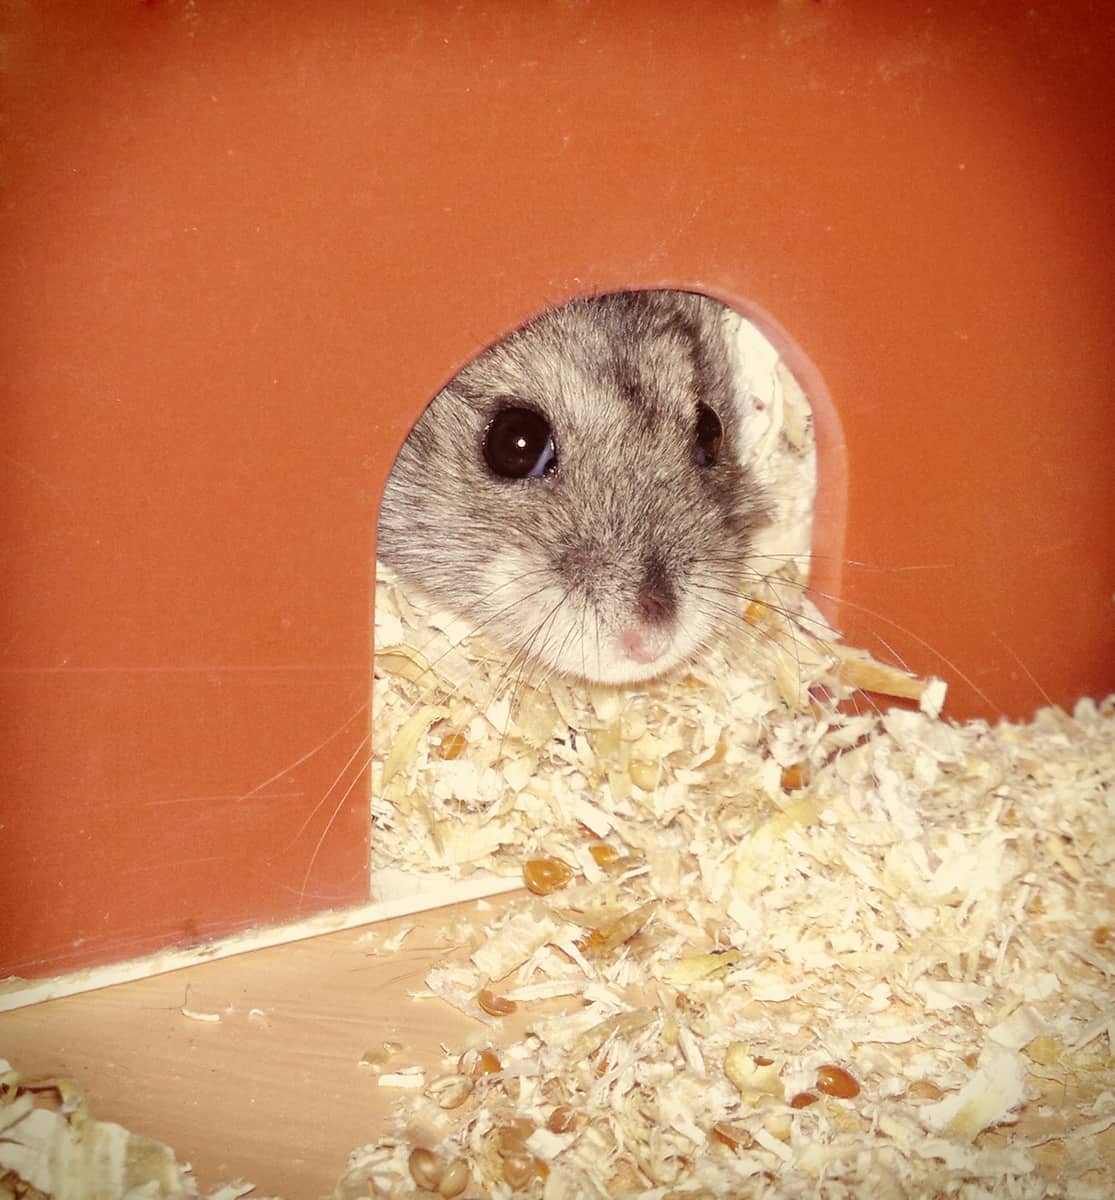 djungarian dwarf hamster.